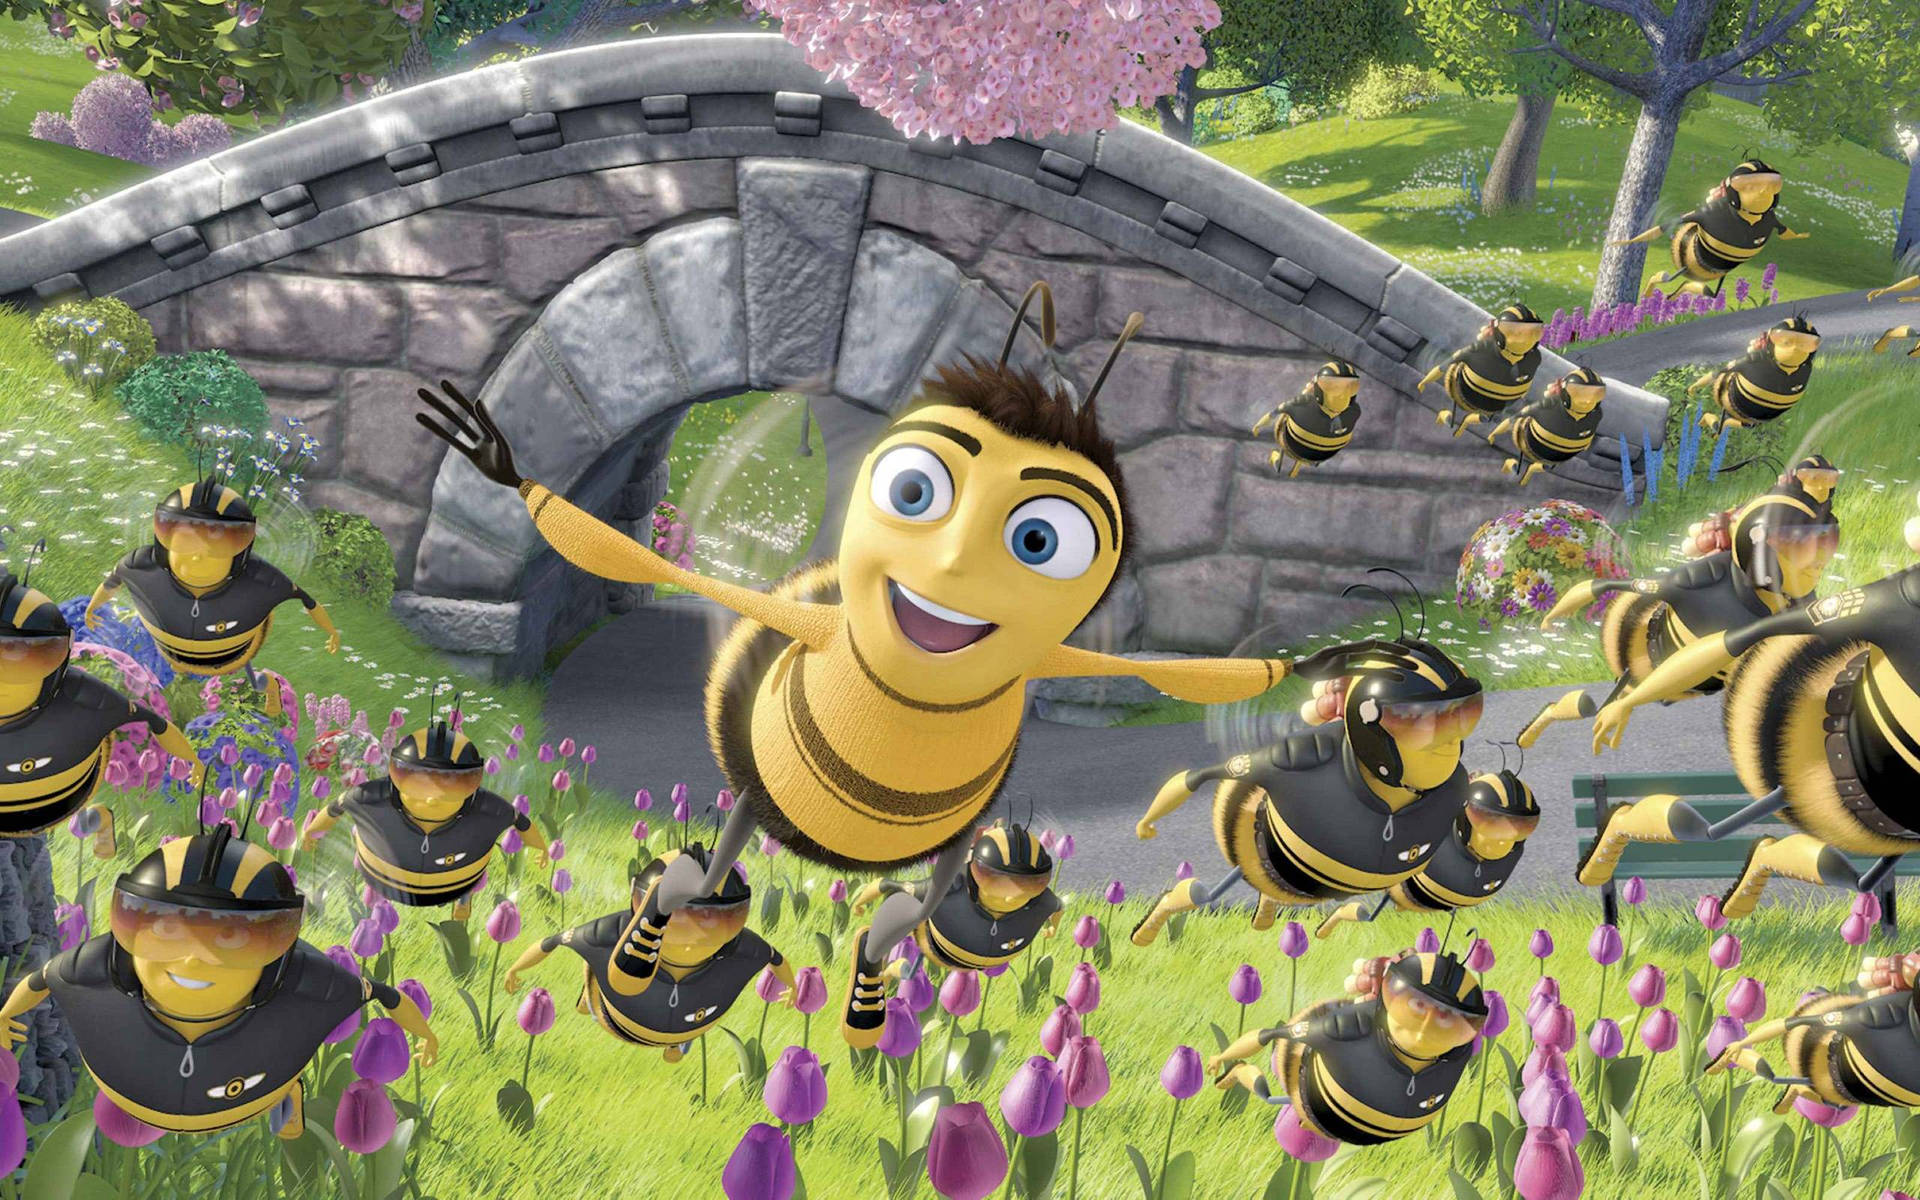 Pollen Power in Action from Bee Movie Wallpaper